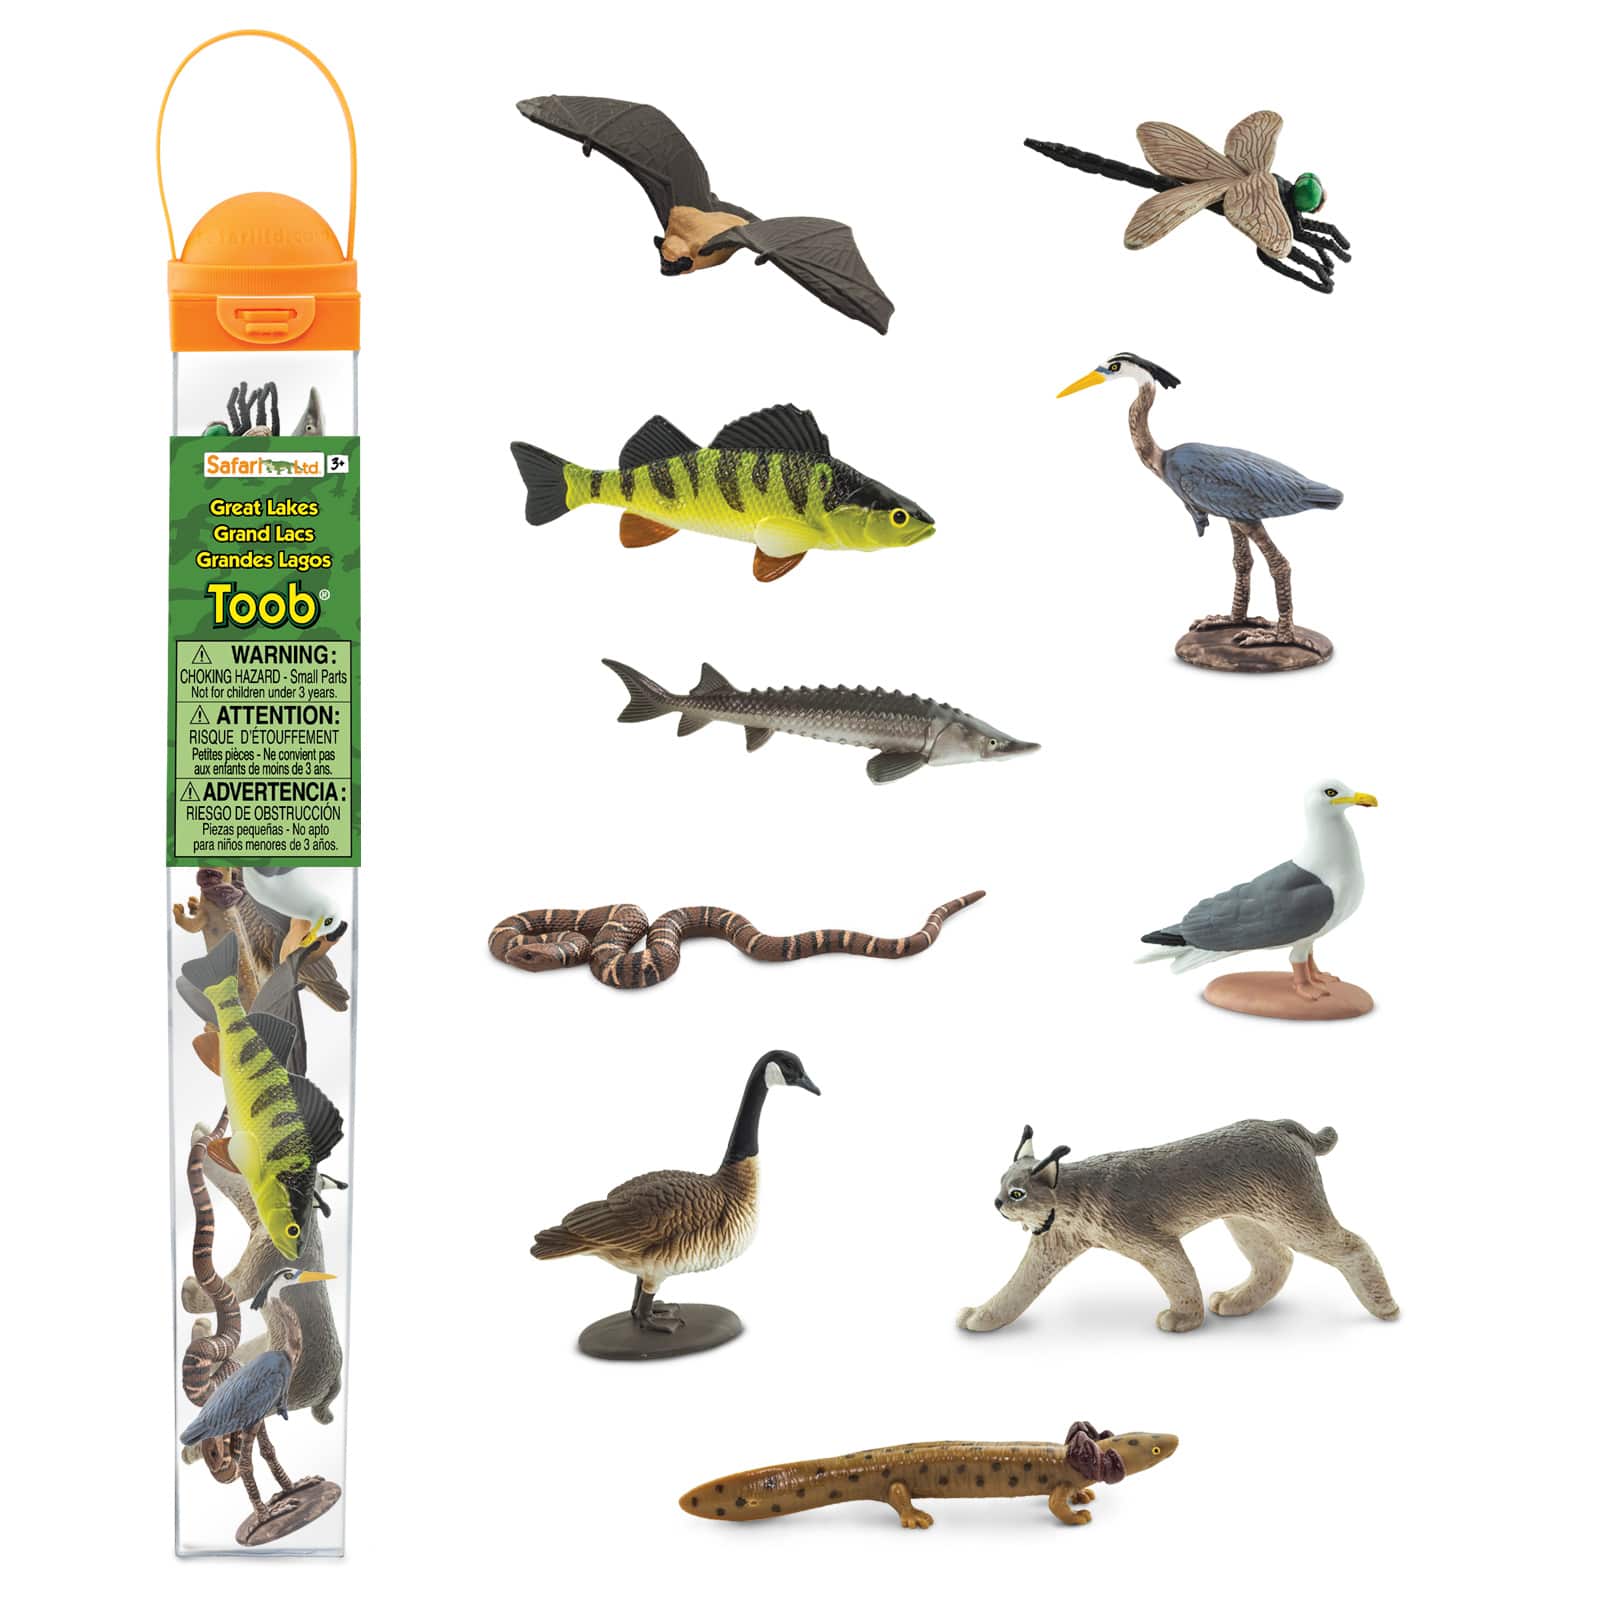 Toobs Backyard Birds Safari Ltd Set Educational Kids Toy Figure 